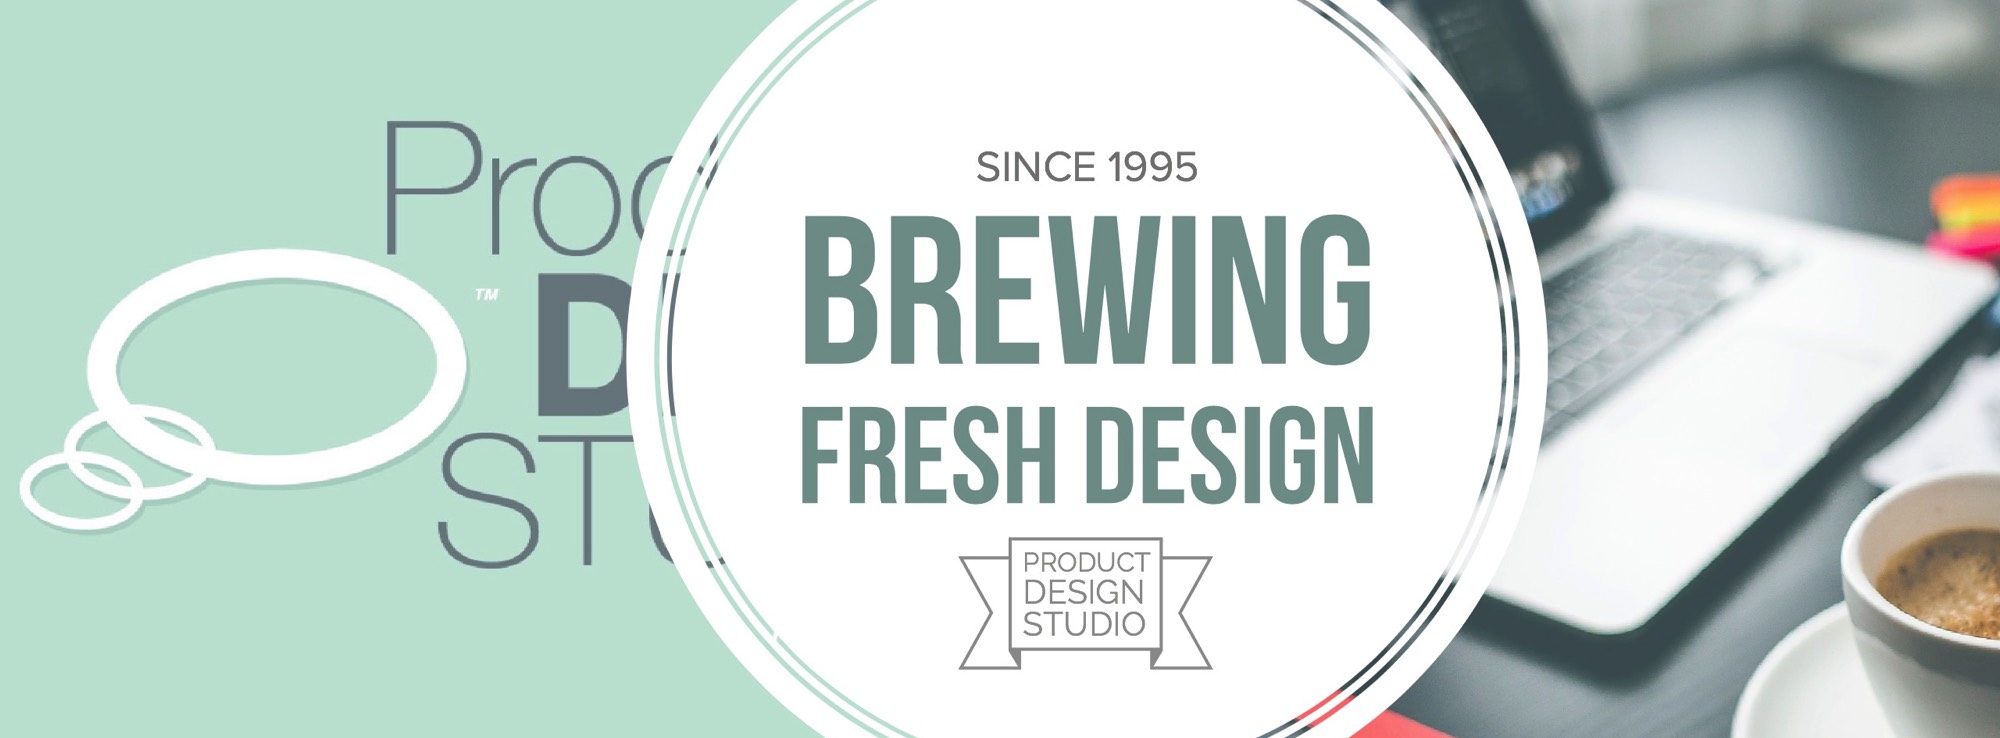 Brewing-Fresh-Design-since-1995-Product-Design-Studio-Melbourne-Australia